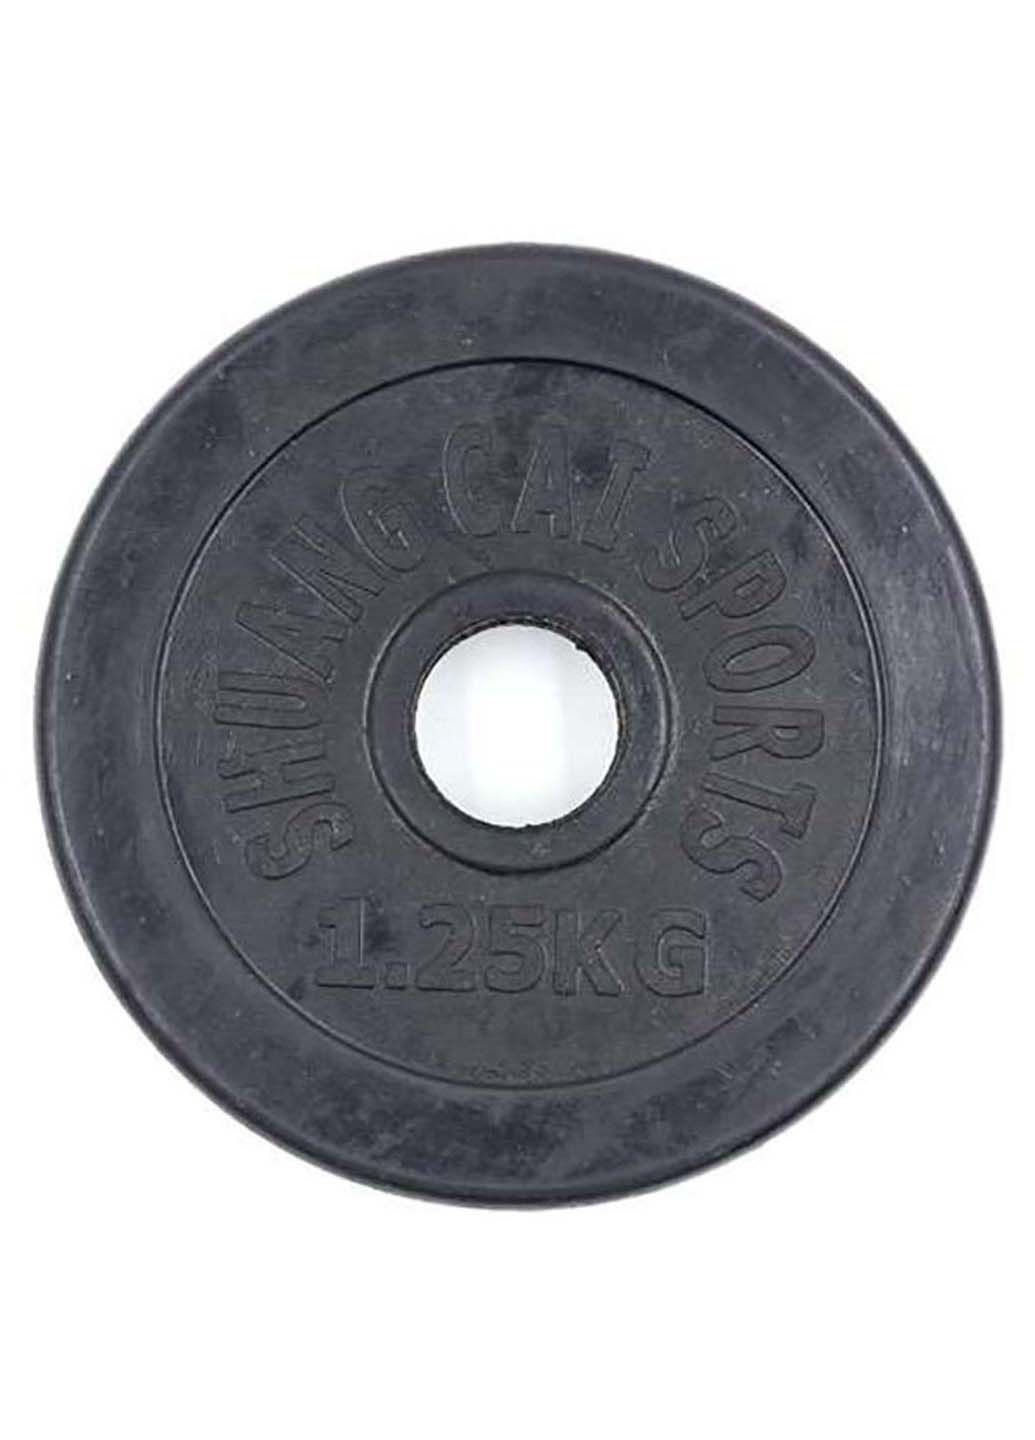 Млинці диски гумові Shuang Cai Sports ТА-1441 1,25 кг FDSO (286043817)